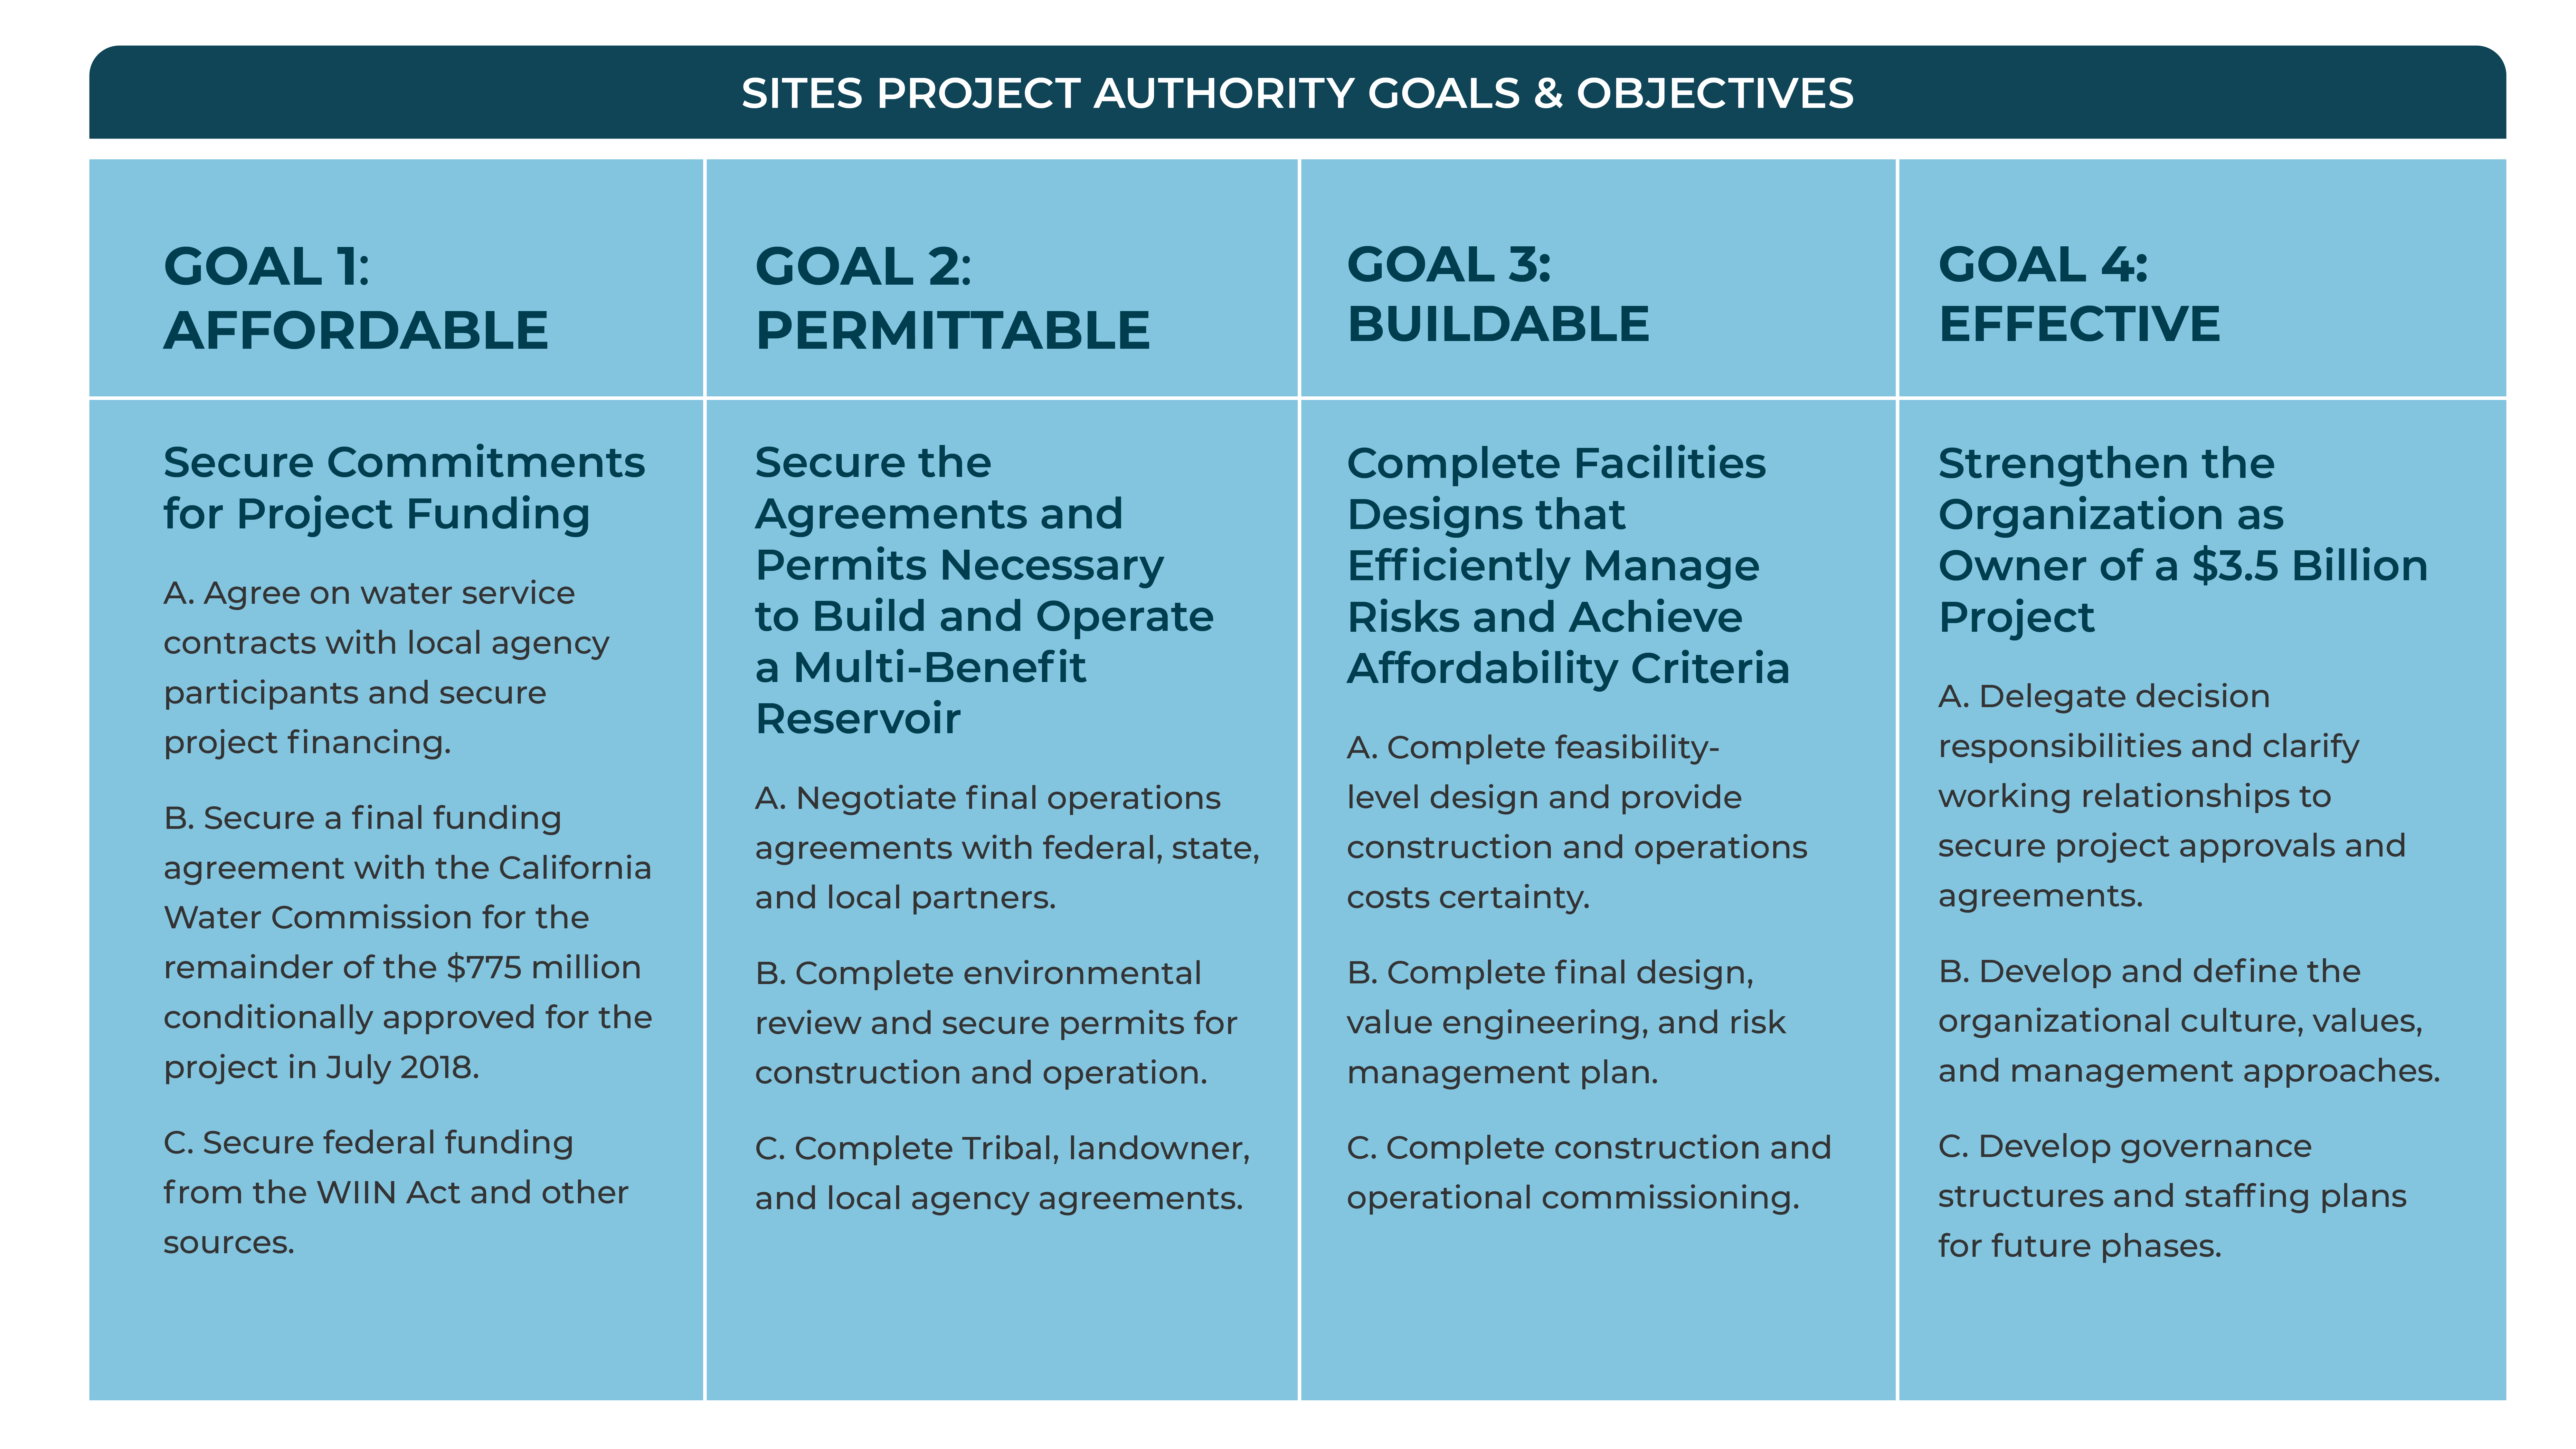 Sites Goals & Objectives